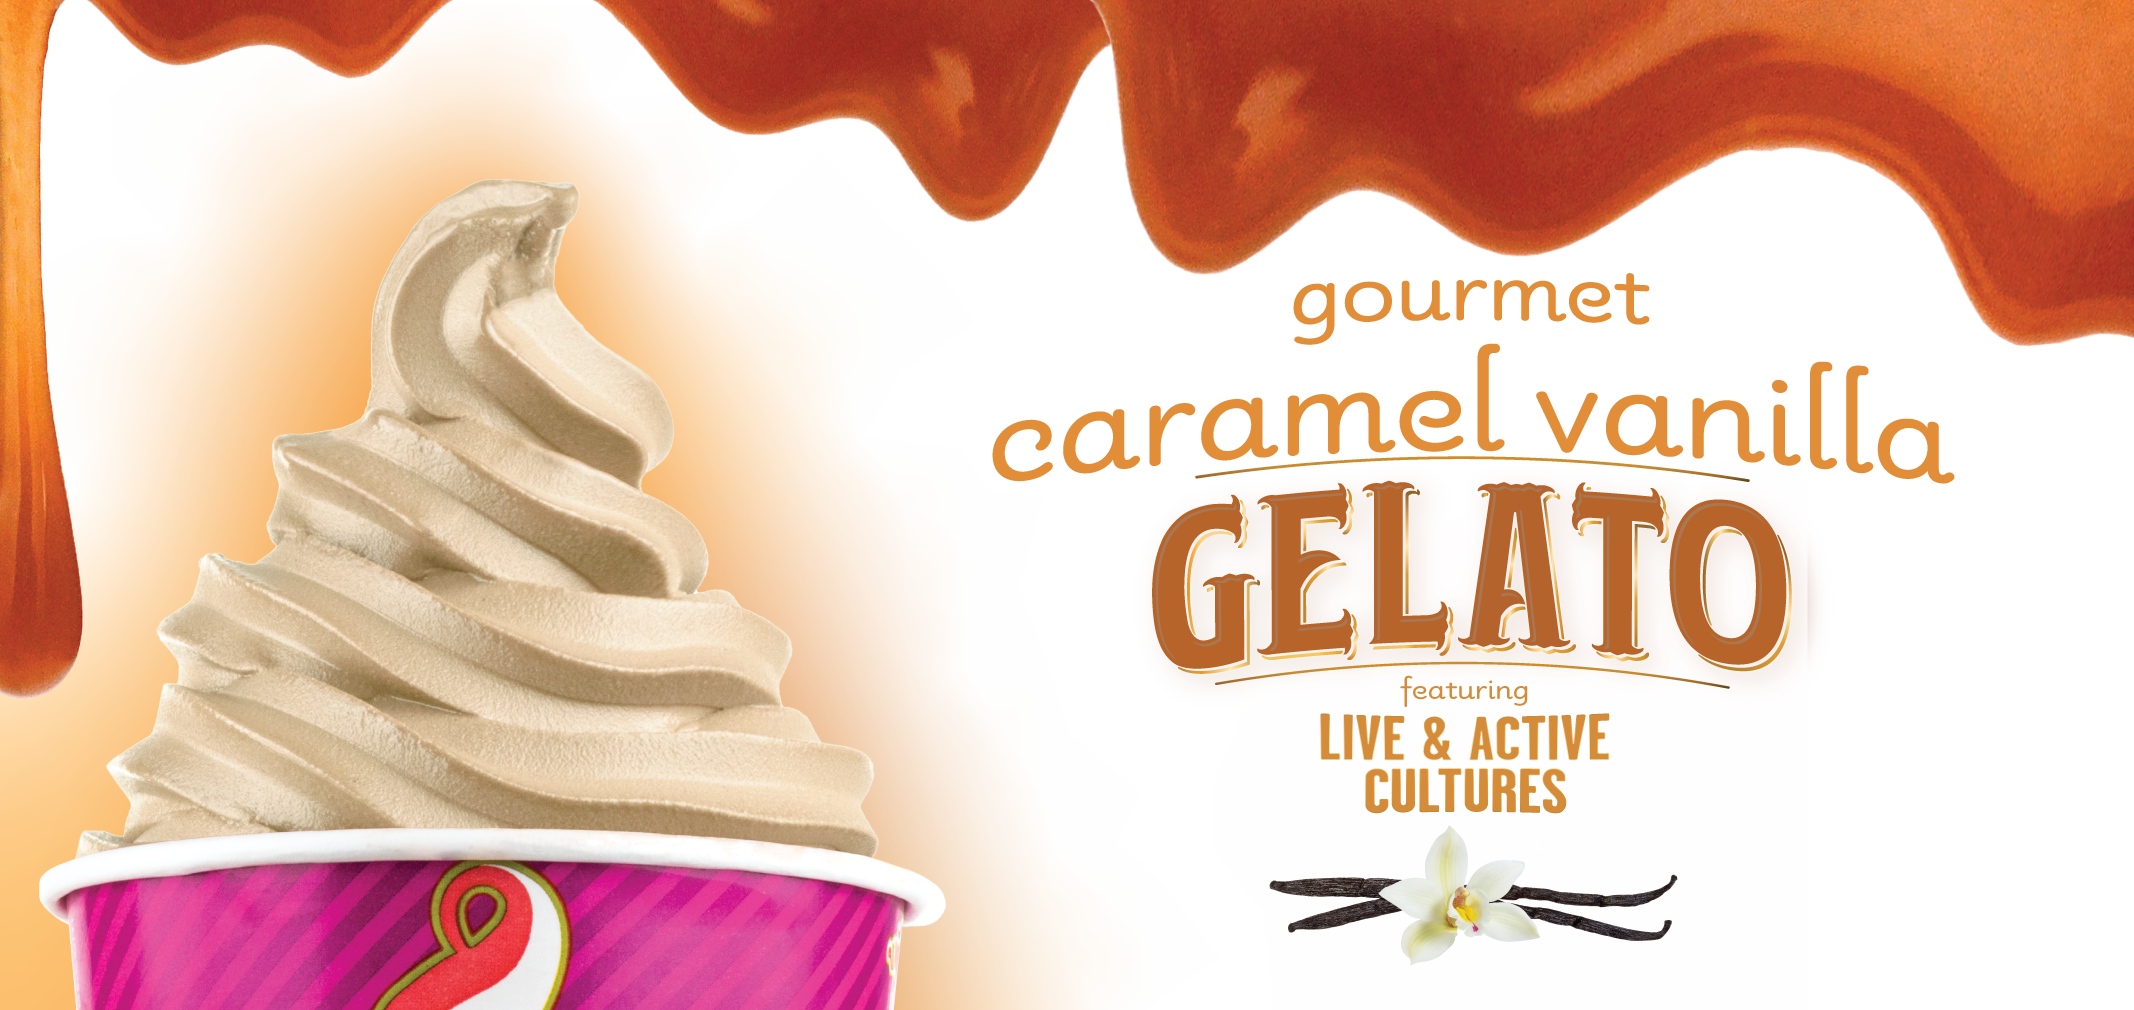 Gourmet Caramel Vanilla Gelato label image